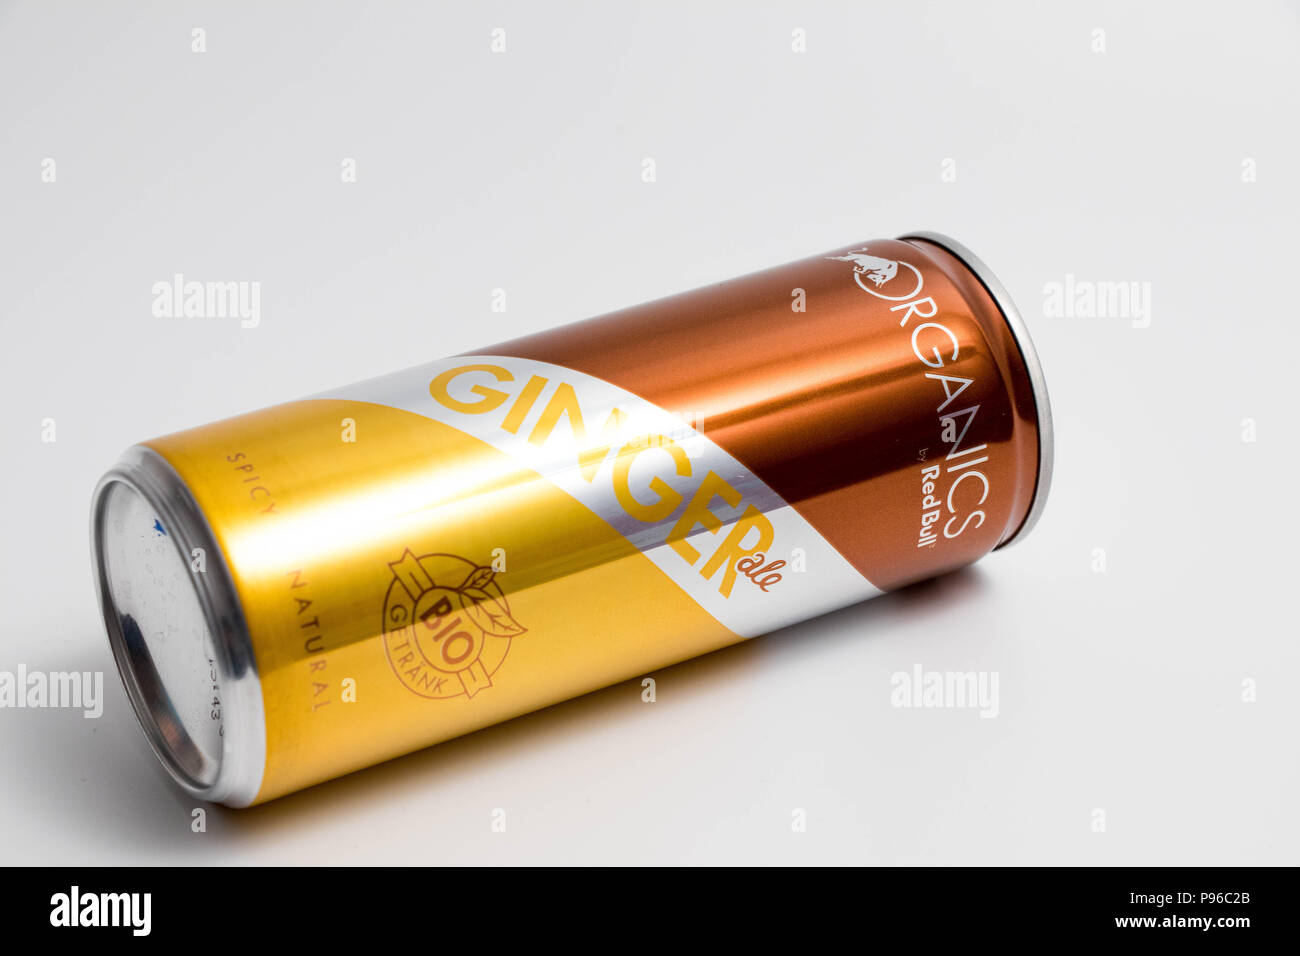 Red Bull Ale organic drink Stock Photo - Alamy